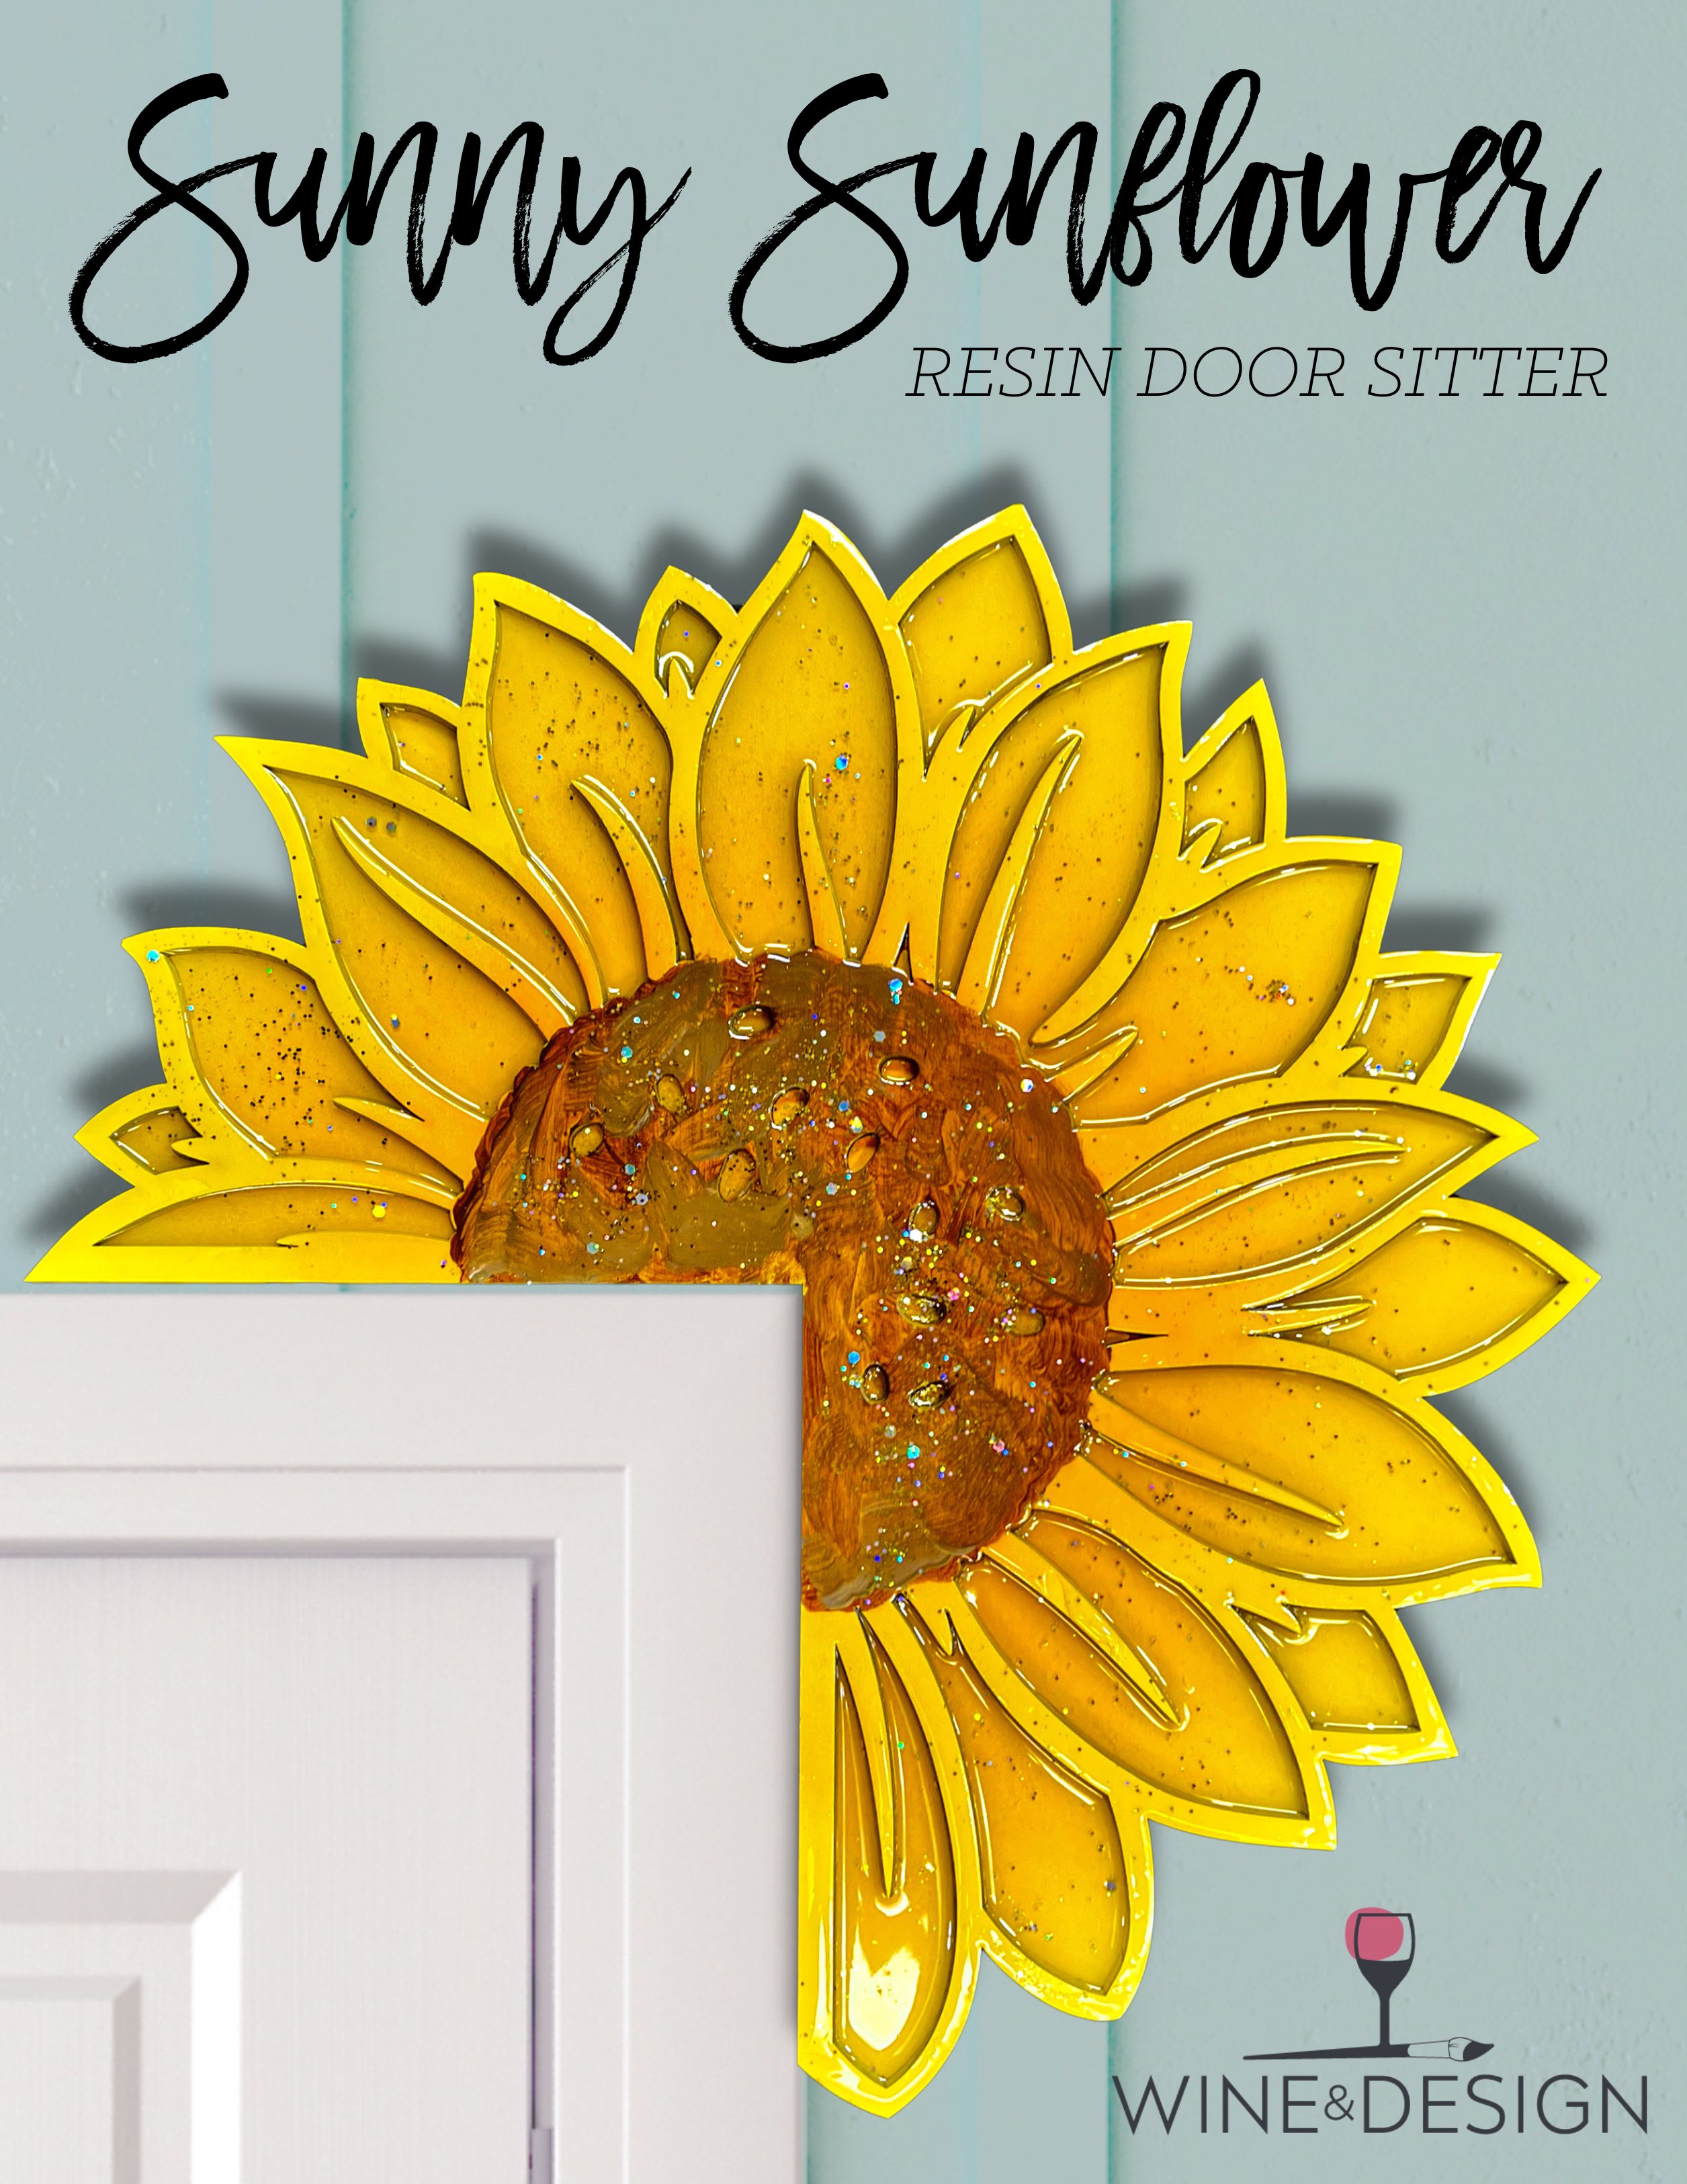 2 SEATS LEFT!!!   Sunny Sunflower Resin Door Sitter